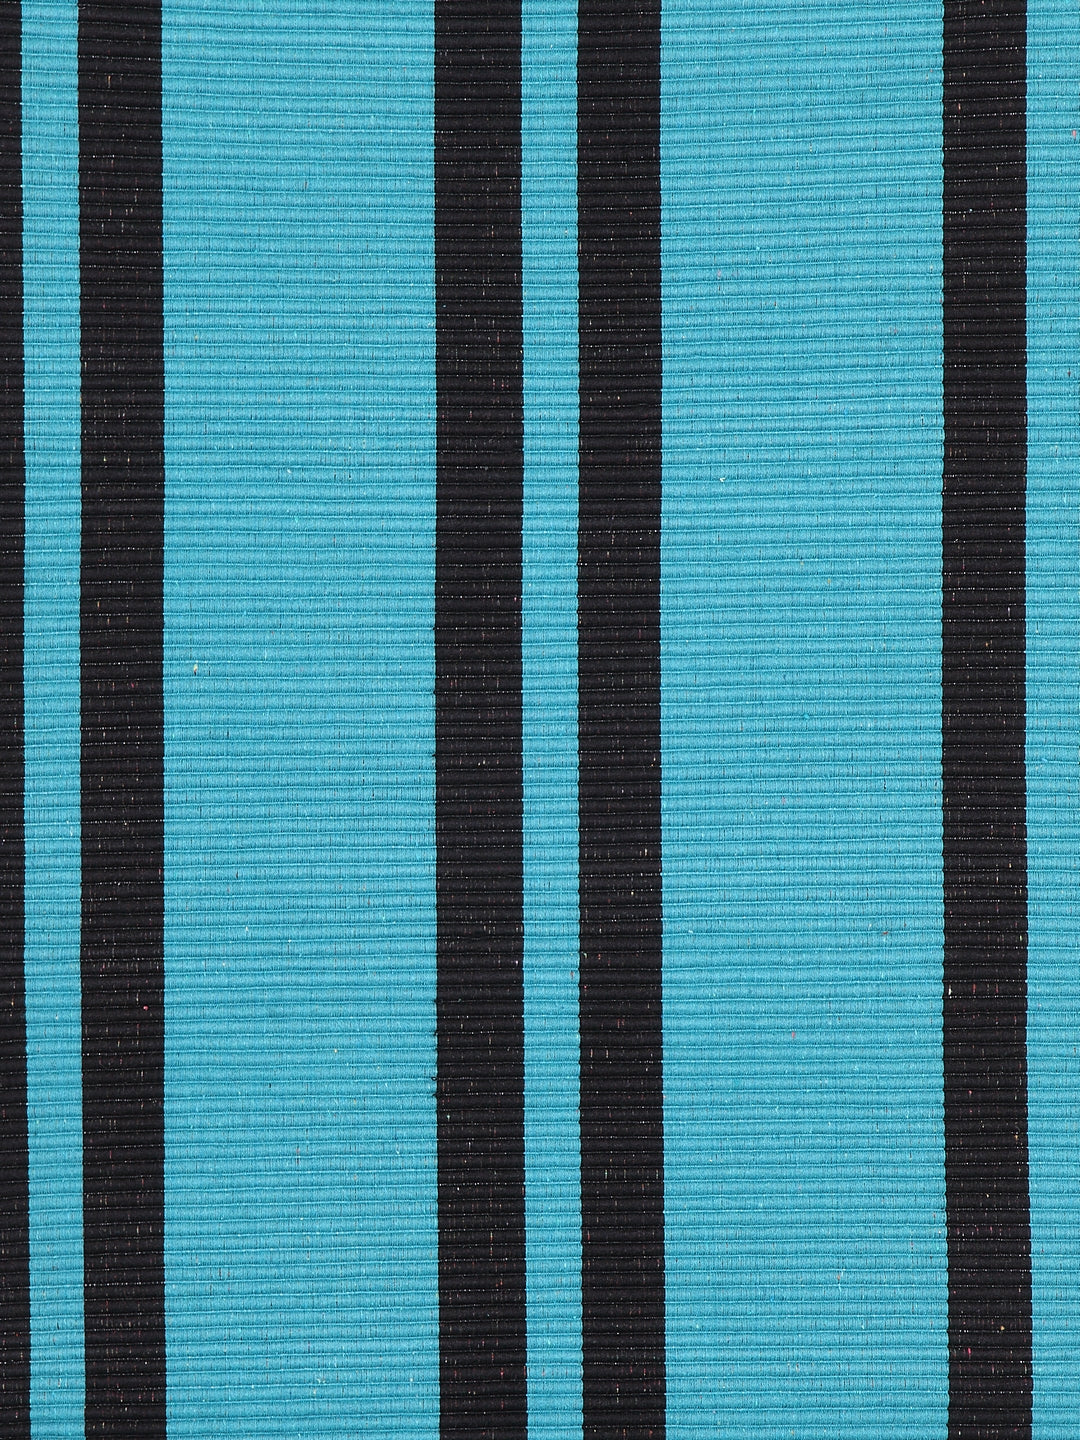 KLOTTHE Set of Two Blue Cotton Striped Floor Mats & Dhurries 50X120 cm